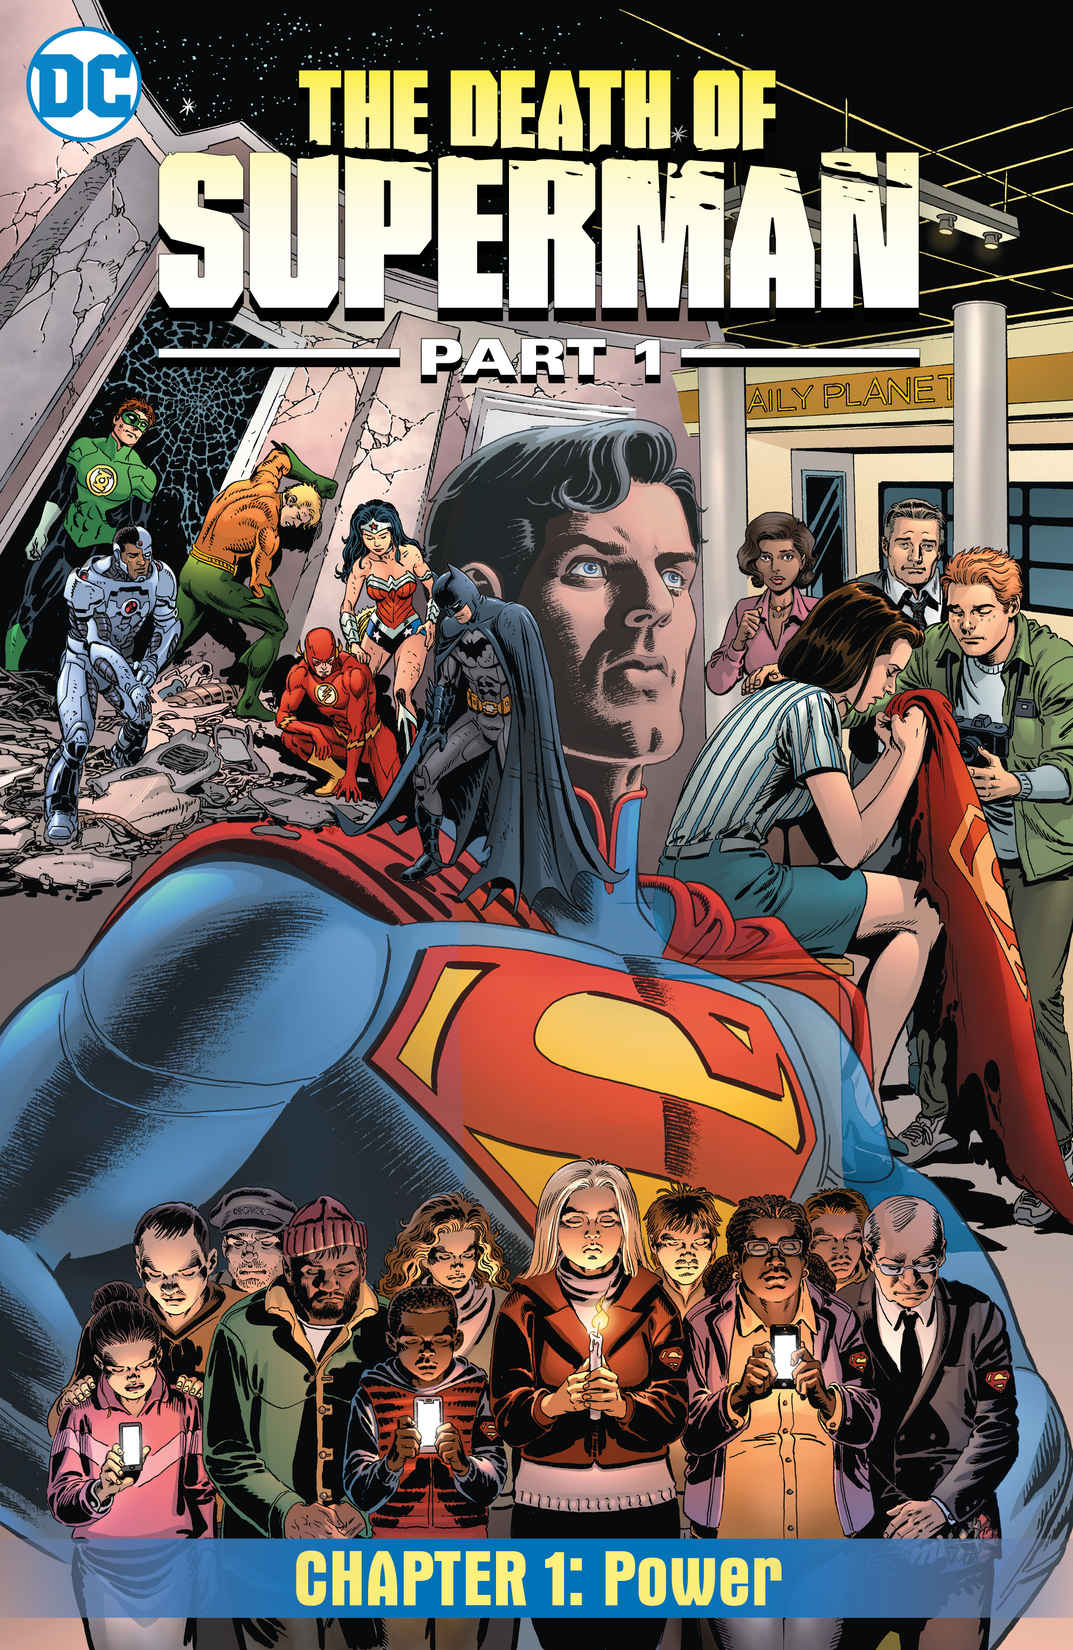 Death of Superman, Part 1 #1 preview images